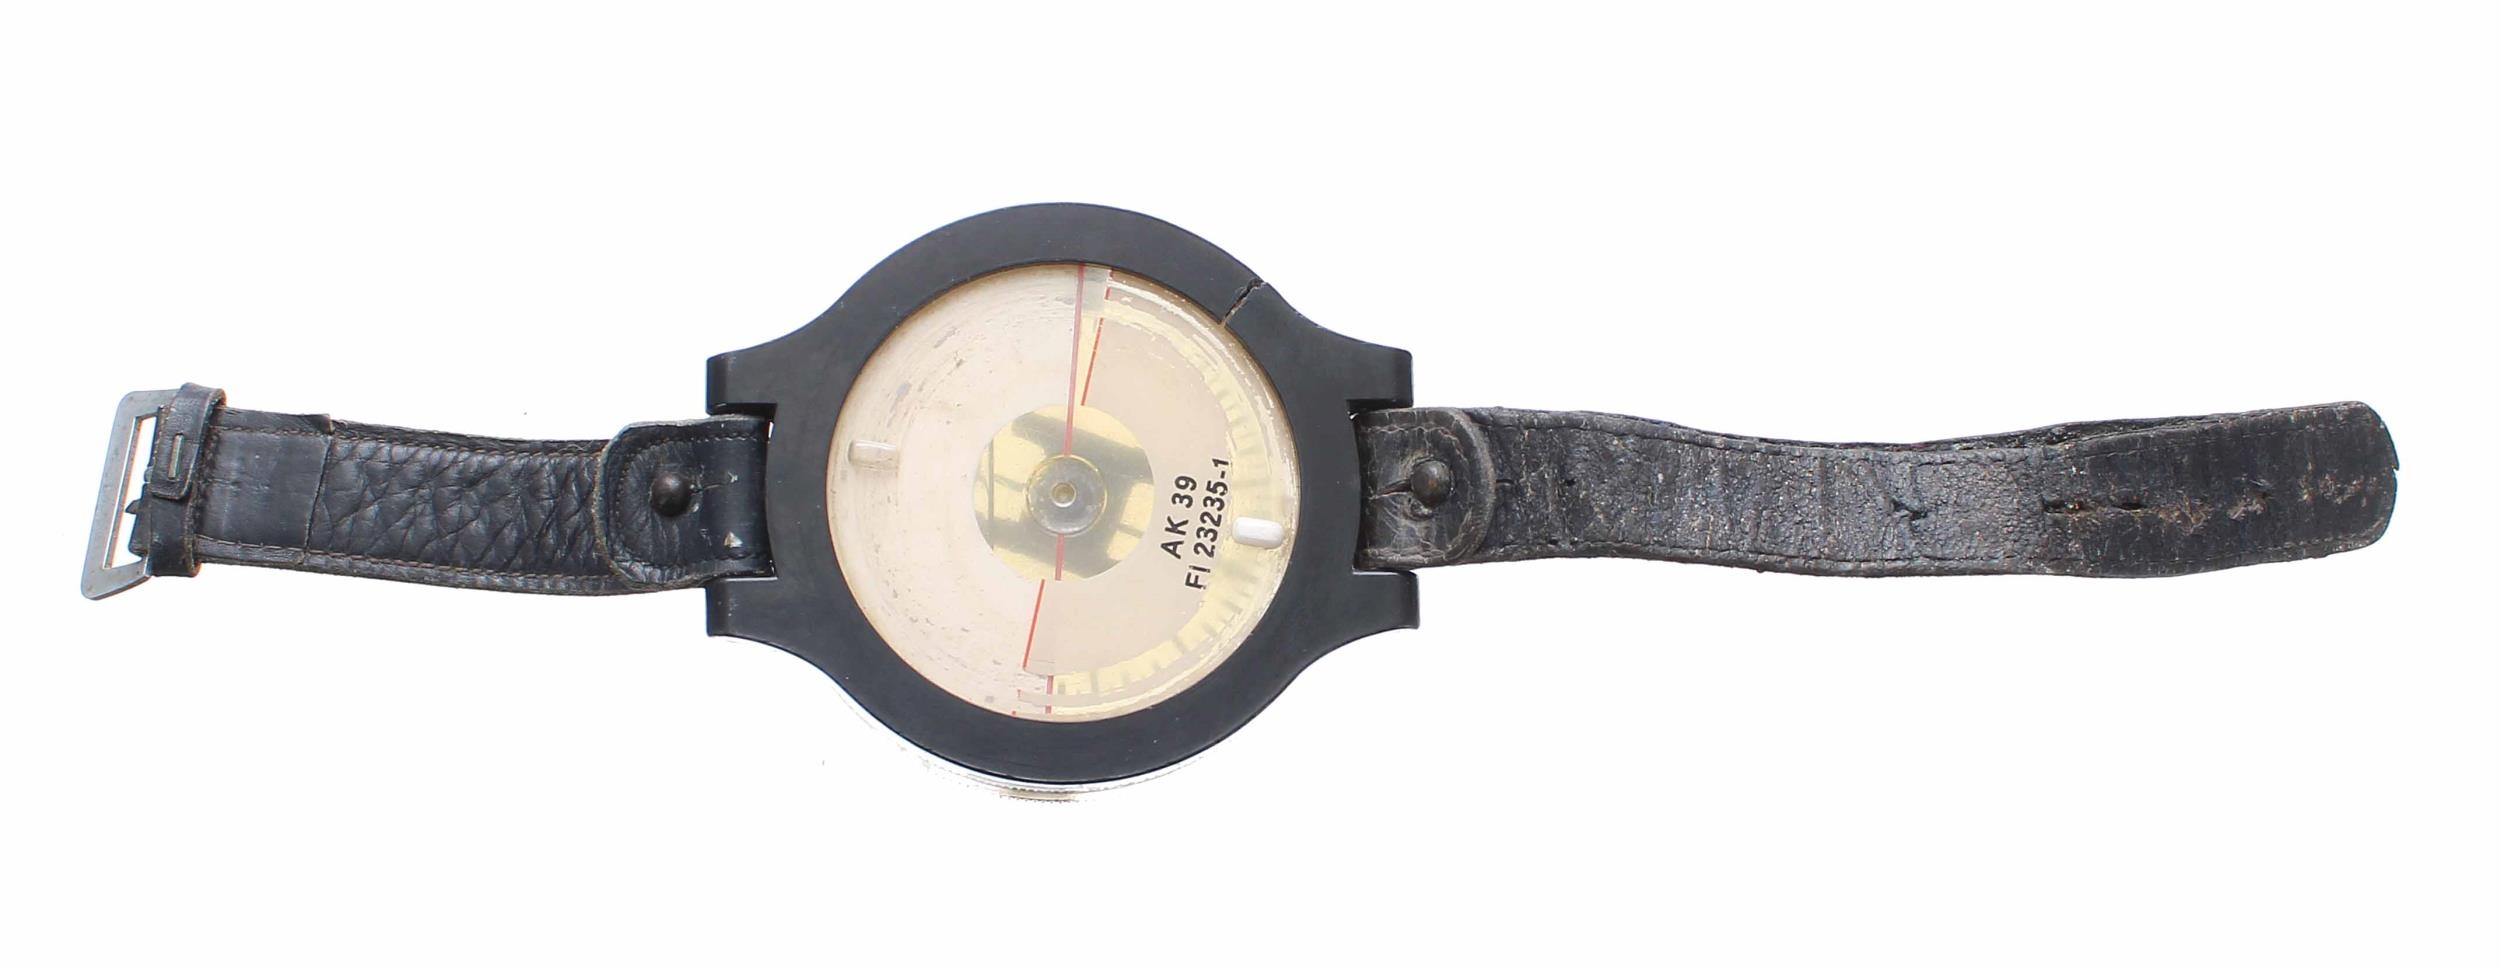 WWII Luftwaffe wrist compass, stamped AK 39 FI 23235-1, 6cm diameter - Image 2 of 2